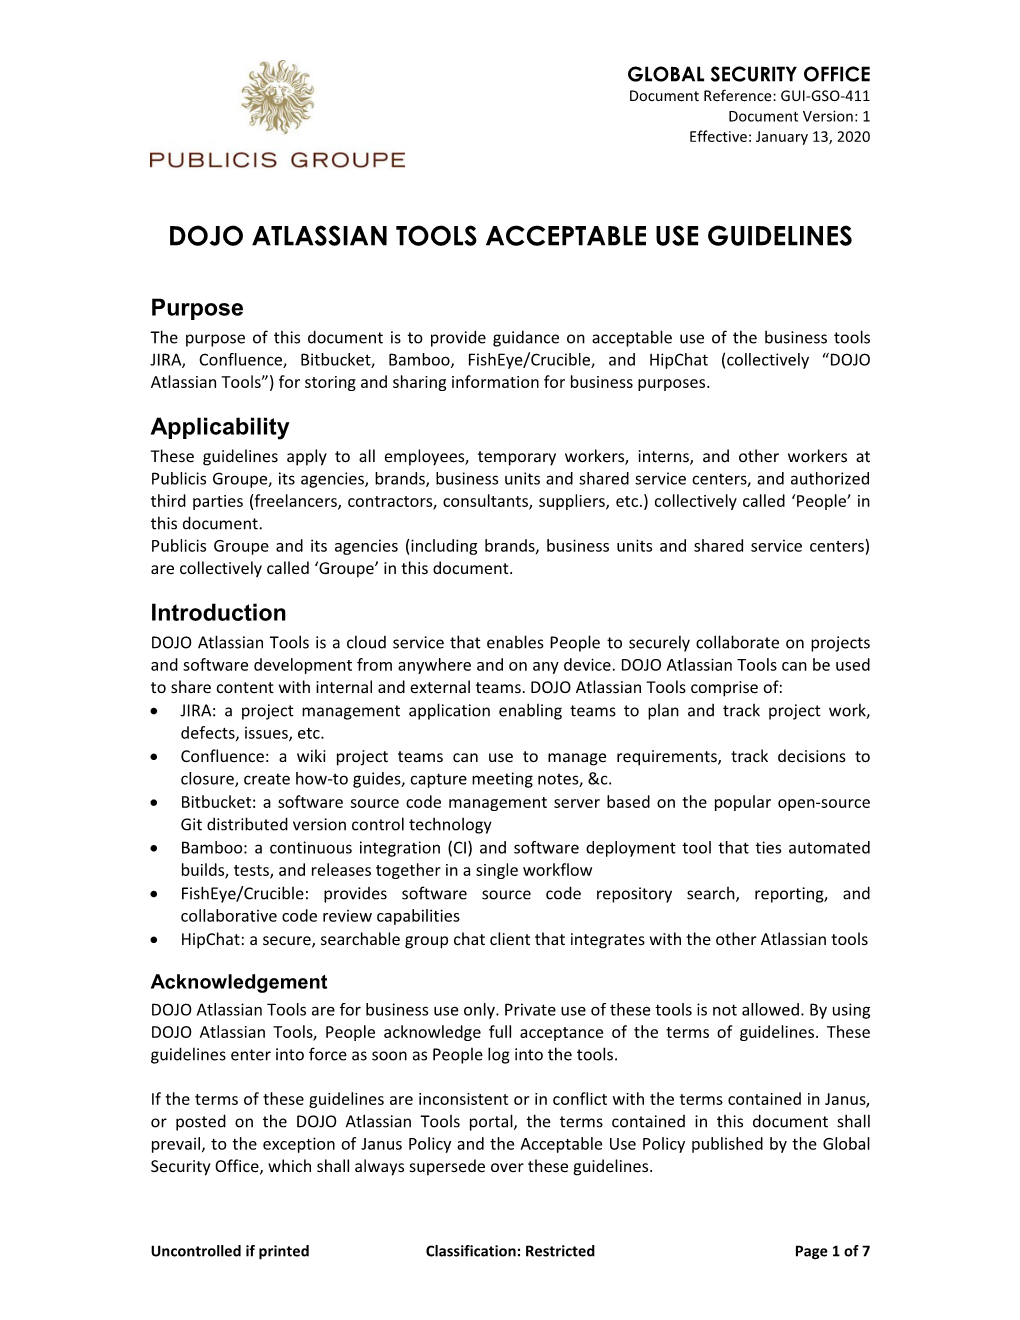 GUI-GSO-411 DOJO Atlassian Tools Acceptable Use Guidelines